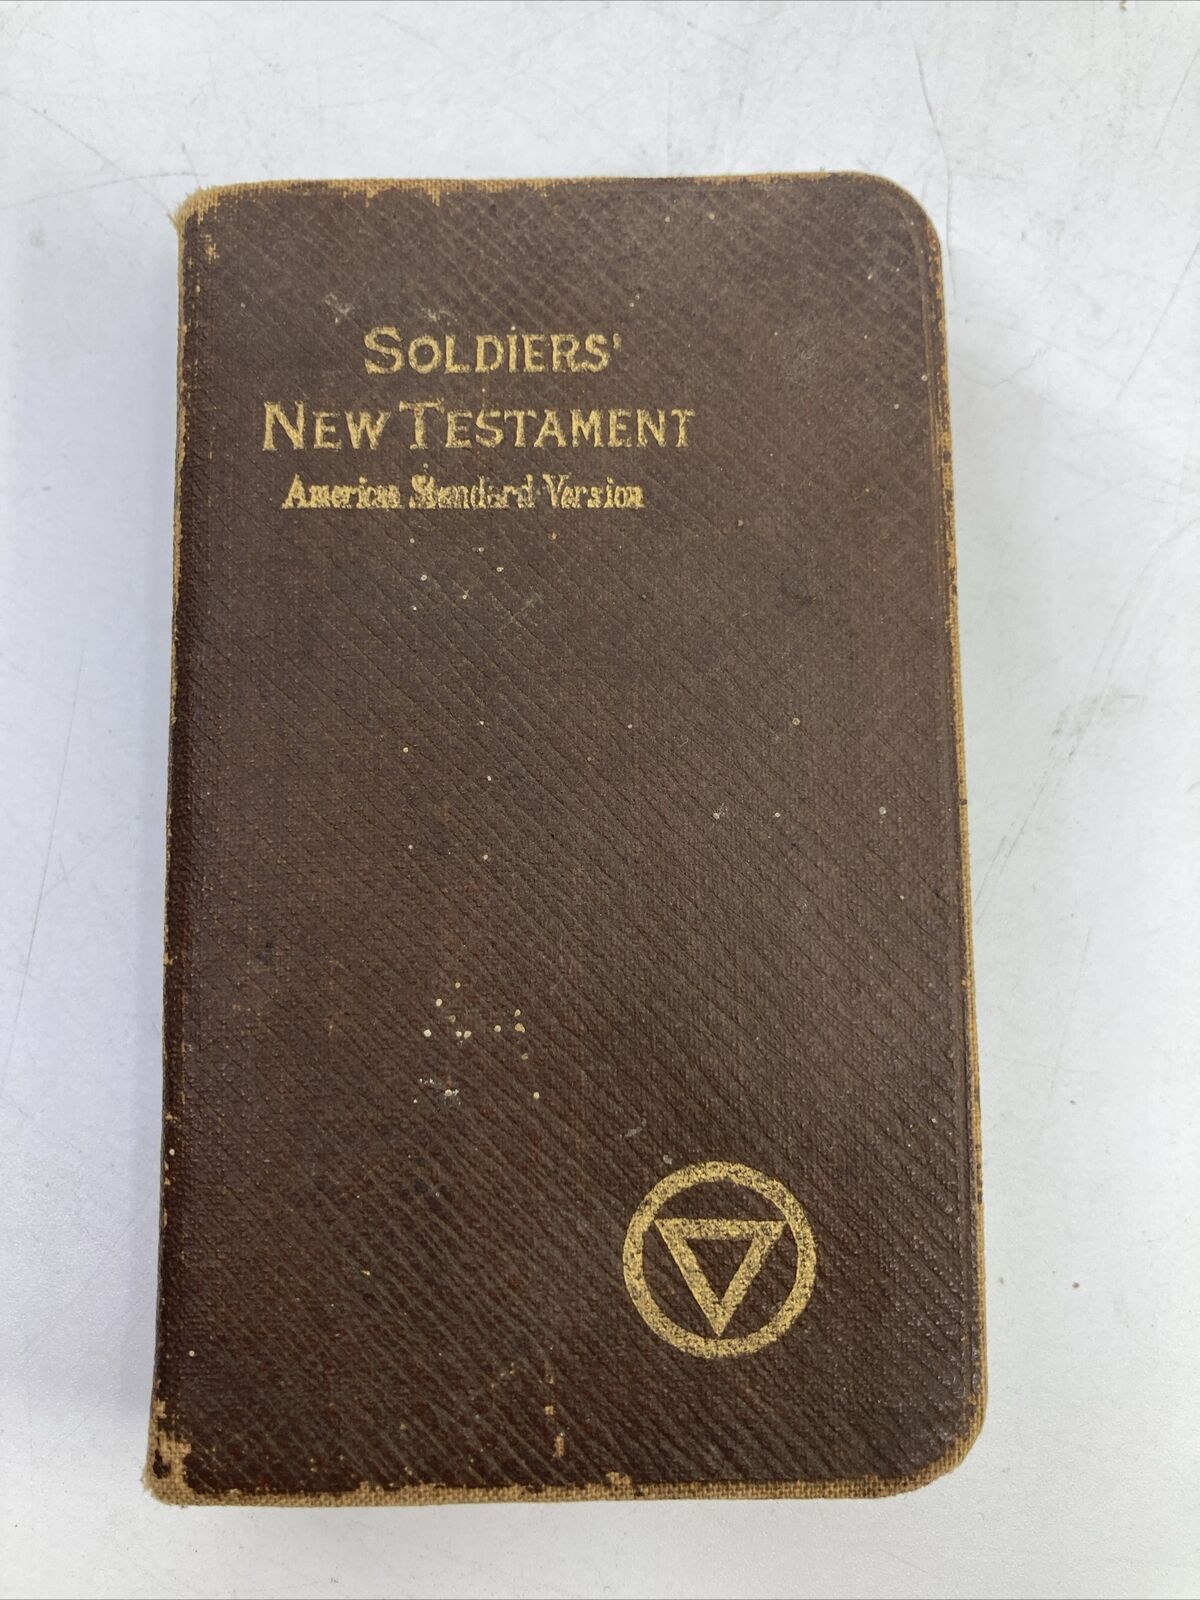 1901 WWI Soldier\'s New Testament Bible ASV American Standard Version Emphasized